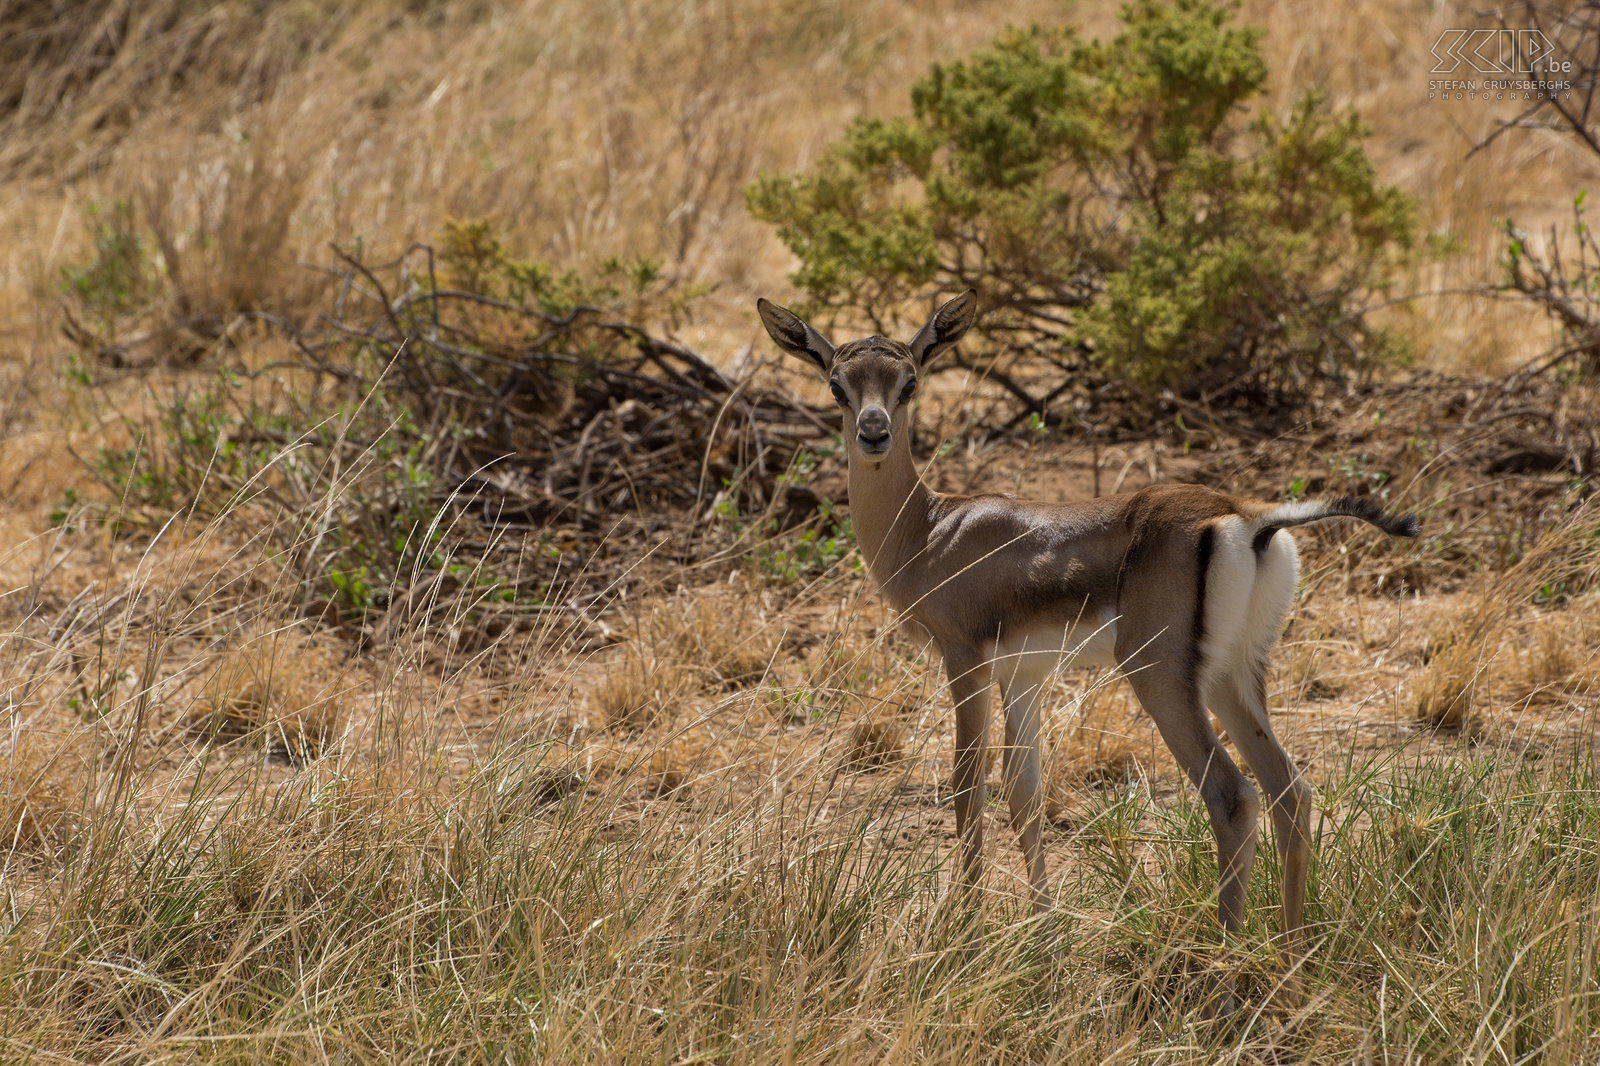 Samburu - Baby Grant gazelle Eén maand oude Grant gazelle (Nanger granti). Stefan Cruysberghs